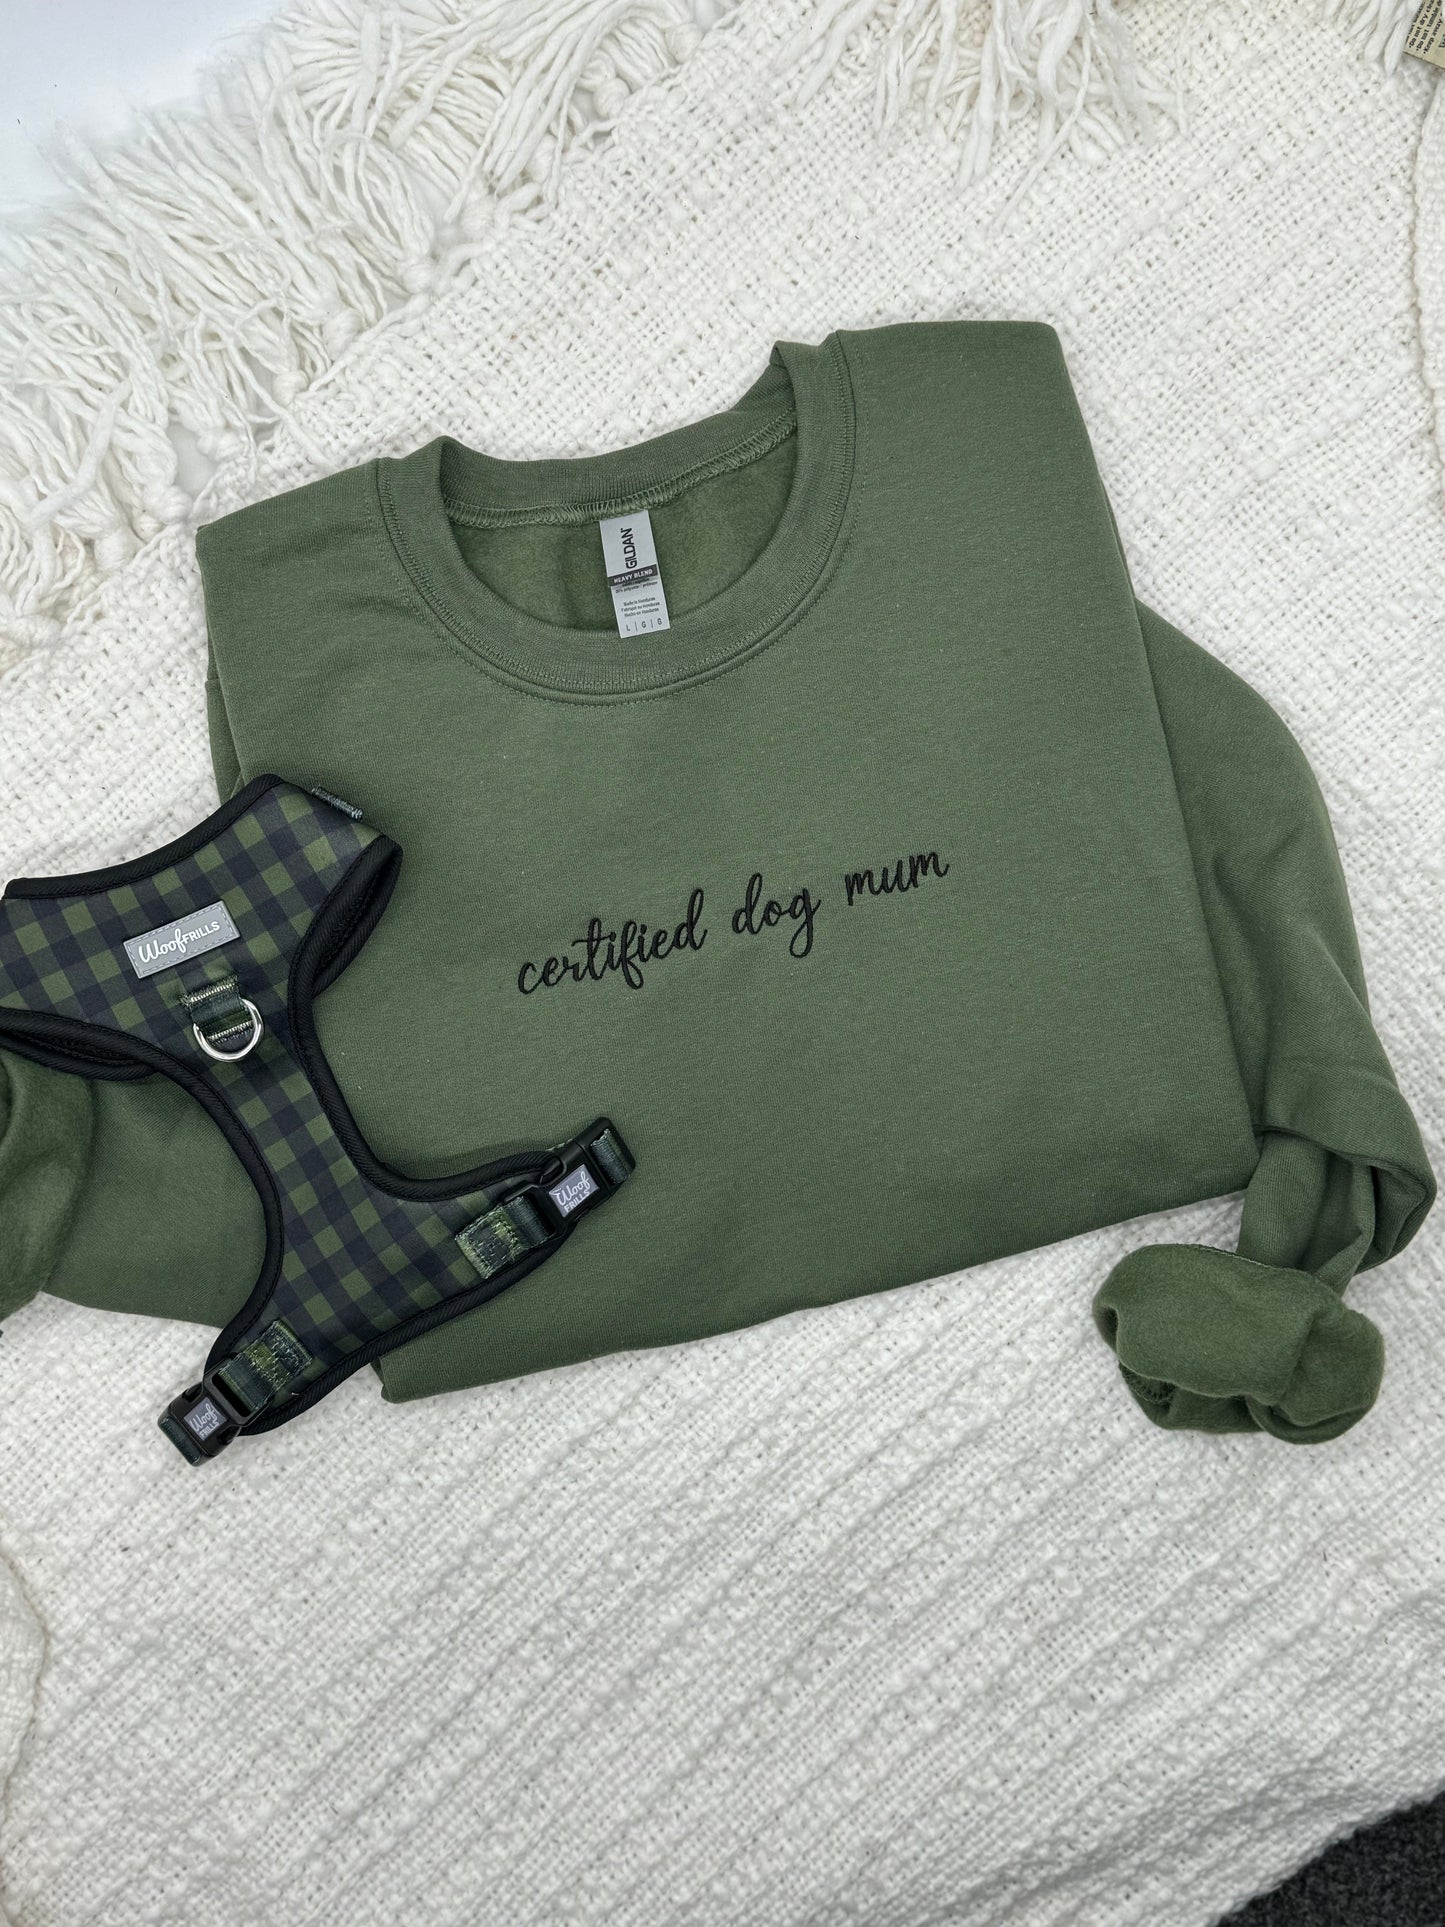 Certified dog mum | Embroidered Hoodie & Sweatshirt